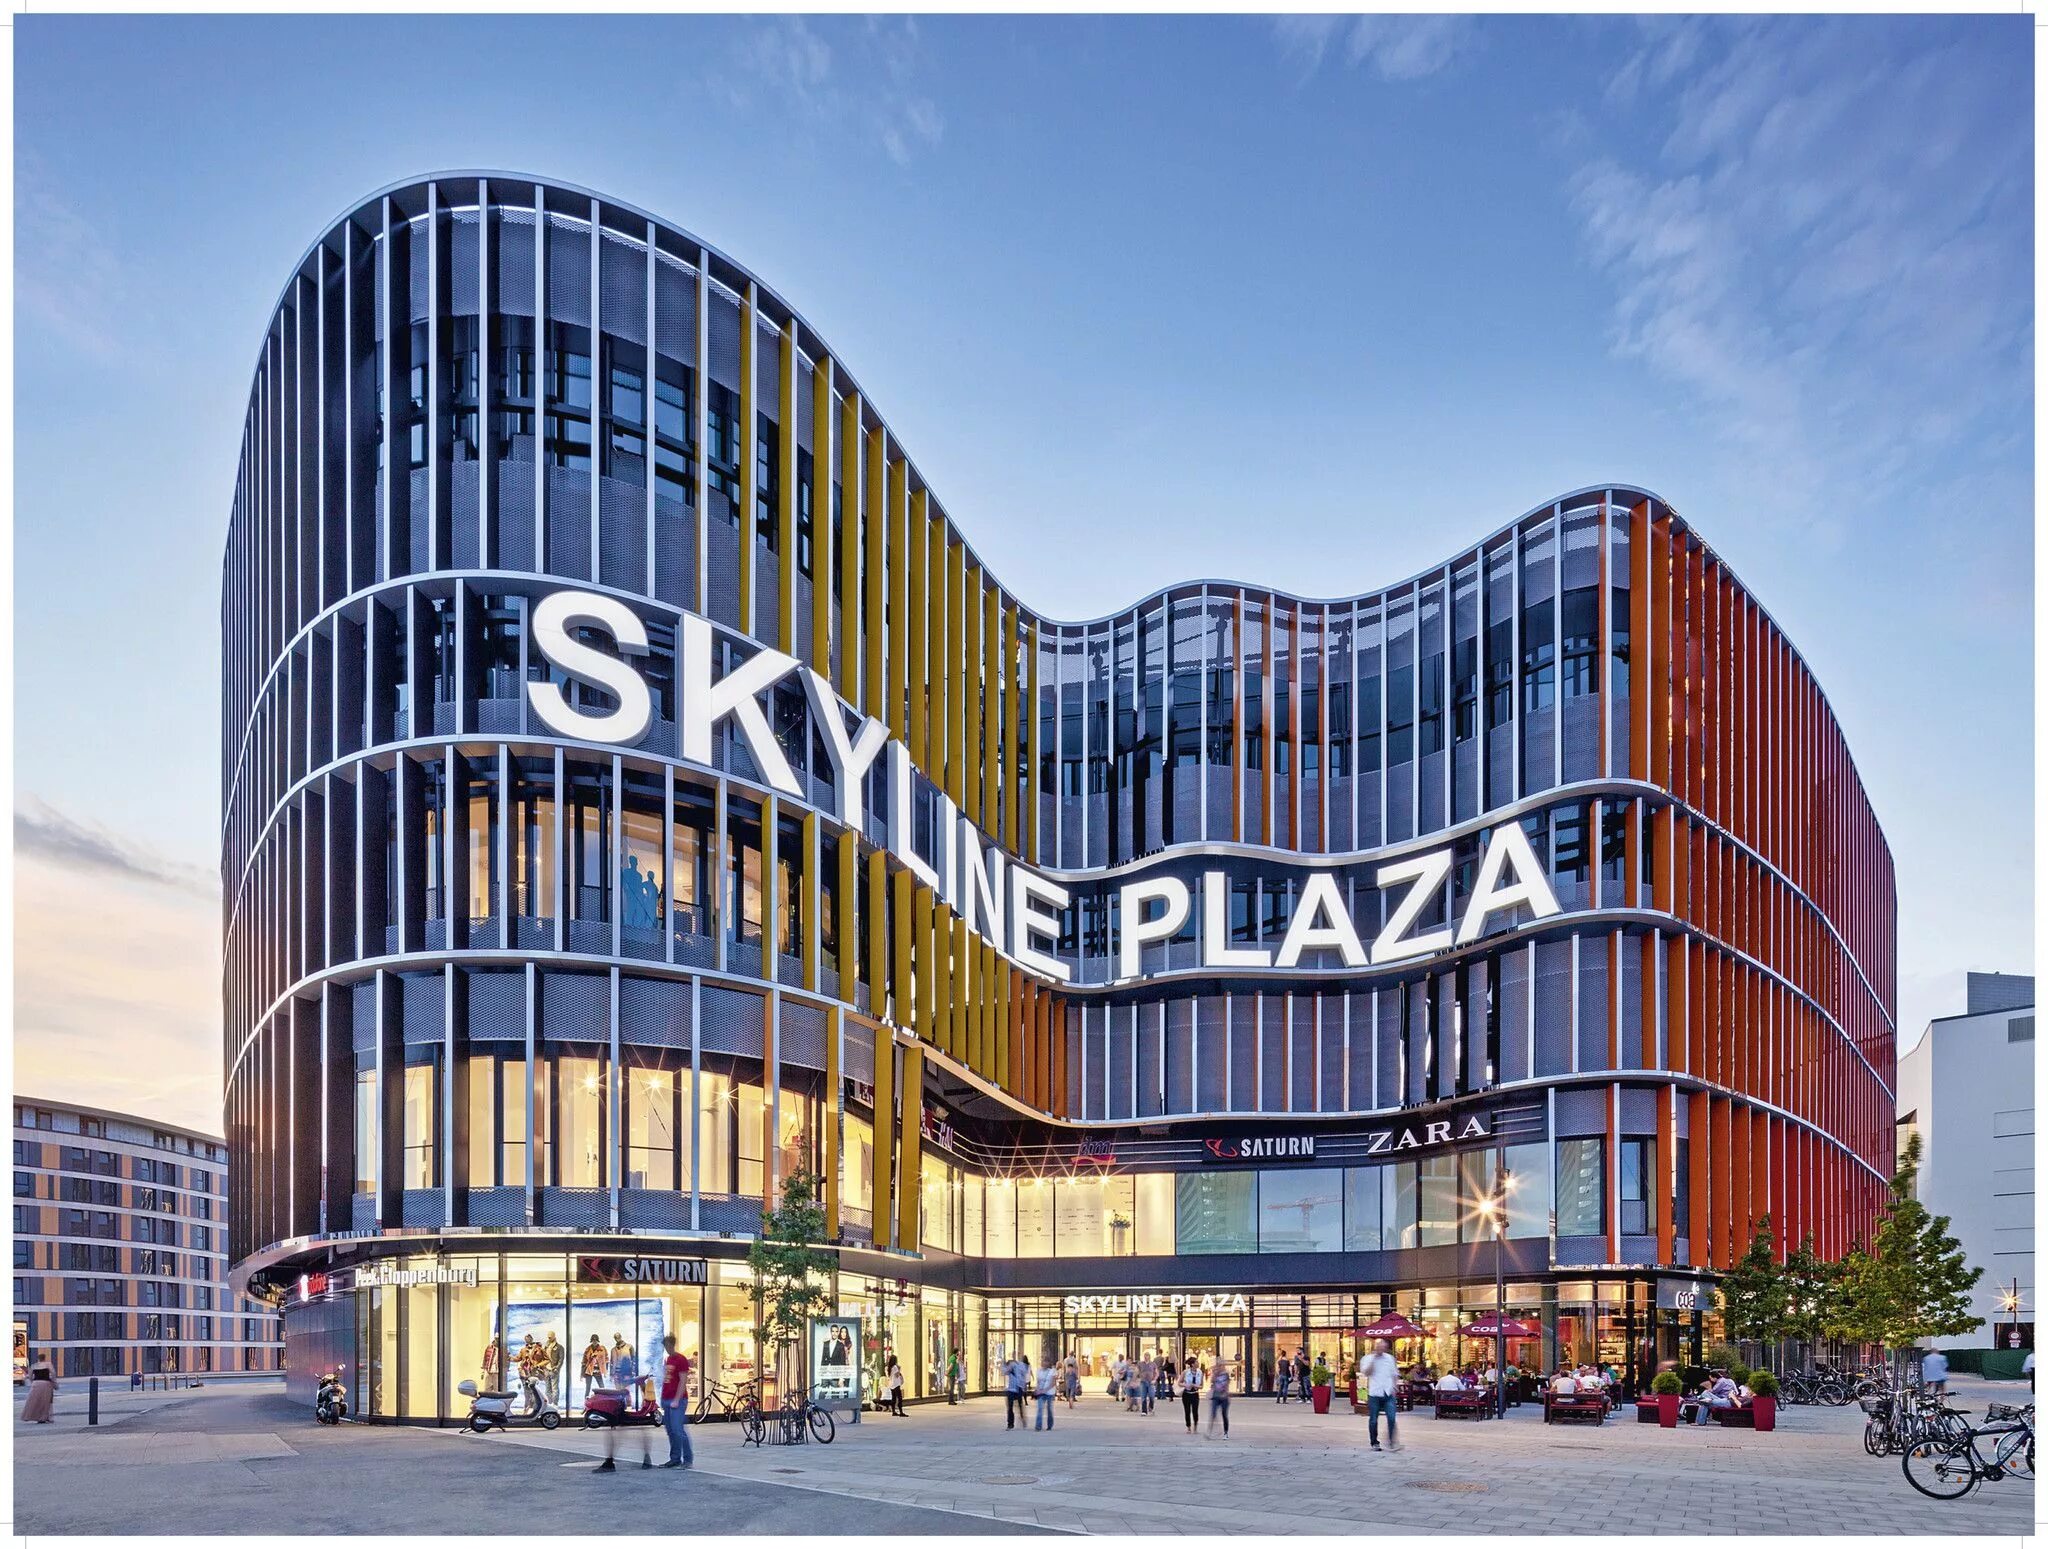 Торговый центр 8 букв. Skyline Plaza Frankfurt. Galleria Mall West фасад. Современная архитектура торговых центров. Торговый центр.